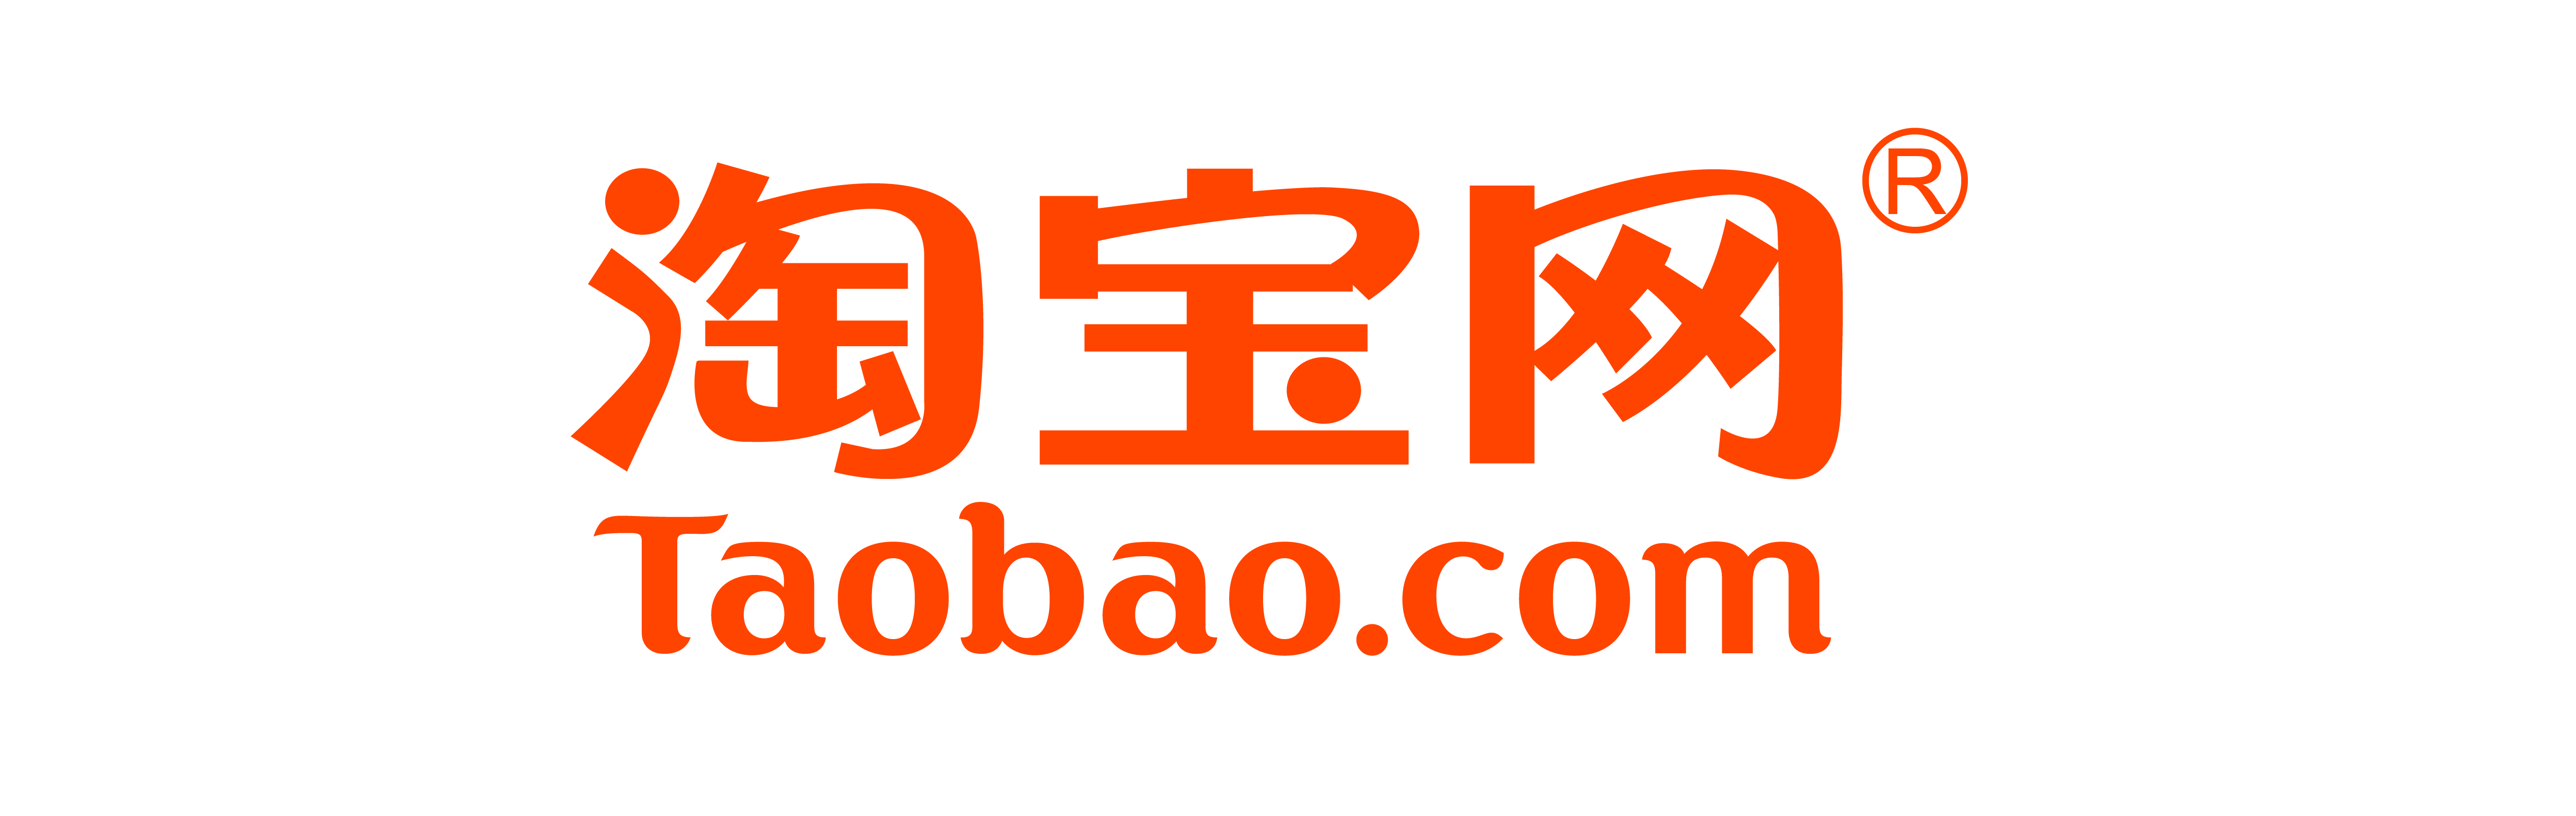  . Taobao.com -  ,        AliExpress. 